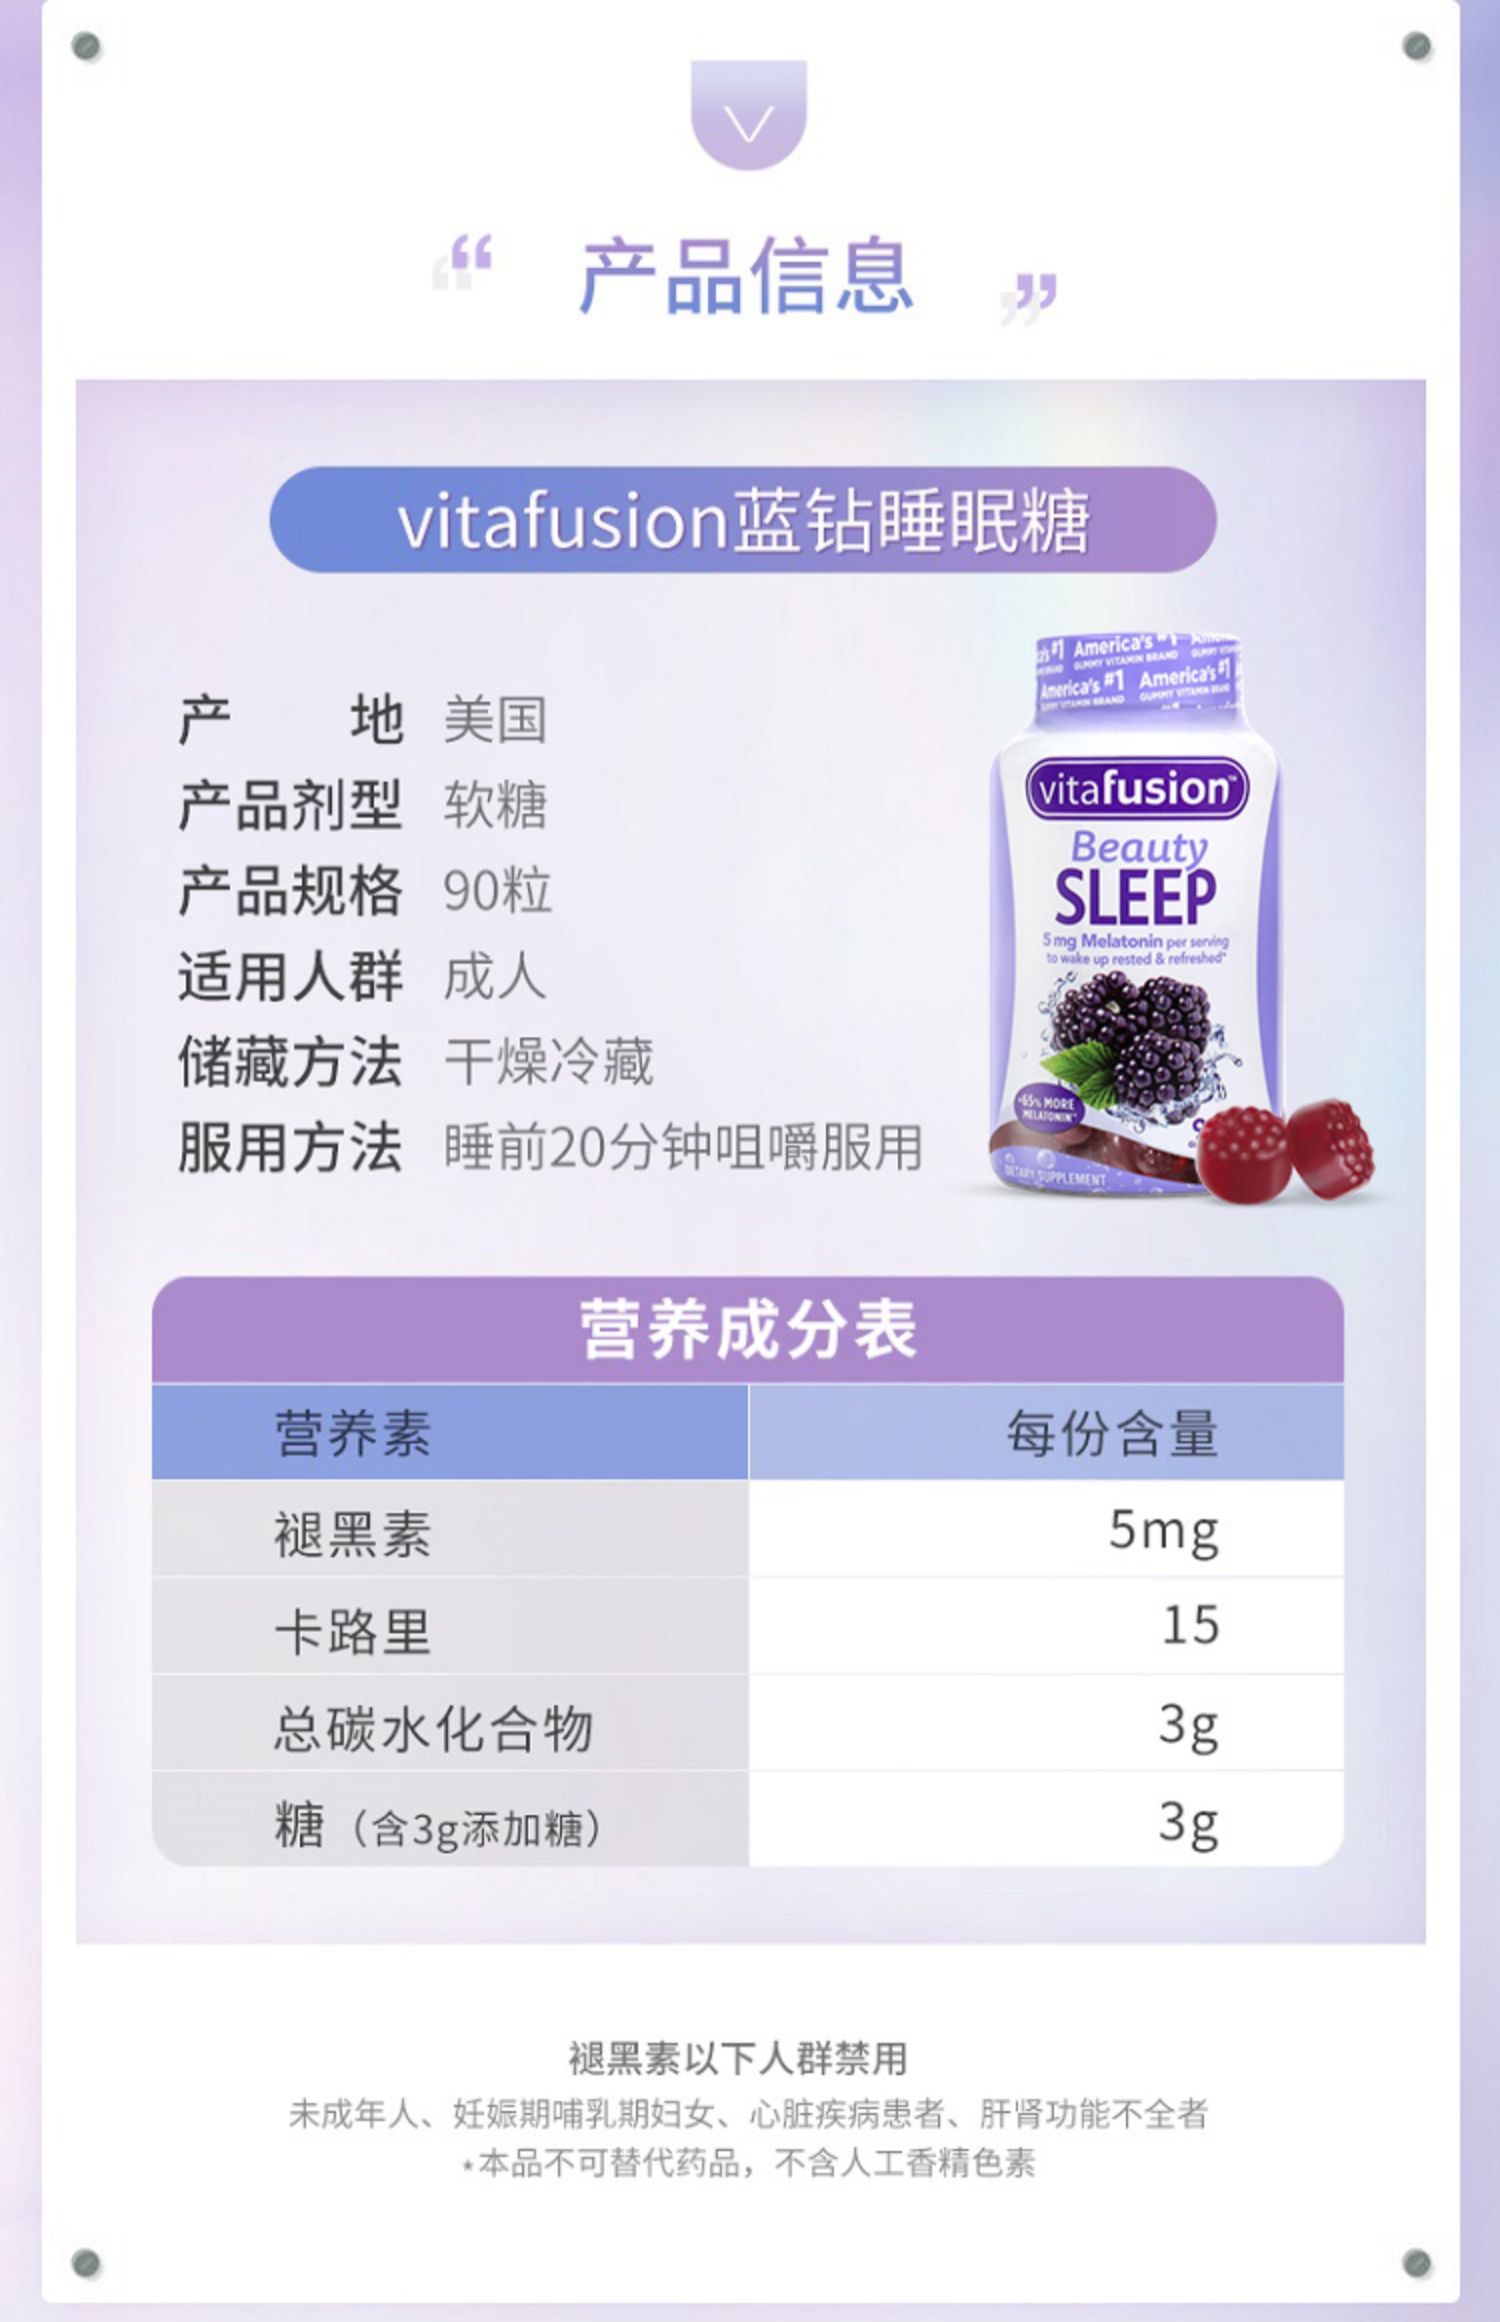 【vitafusion】褪黑素睡眠软糖60粒